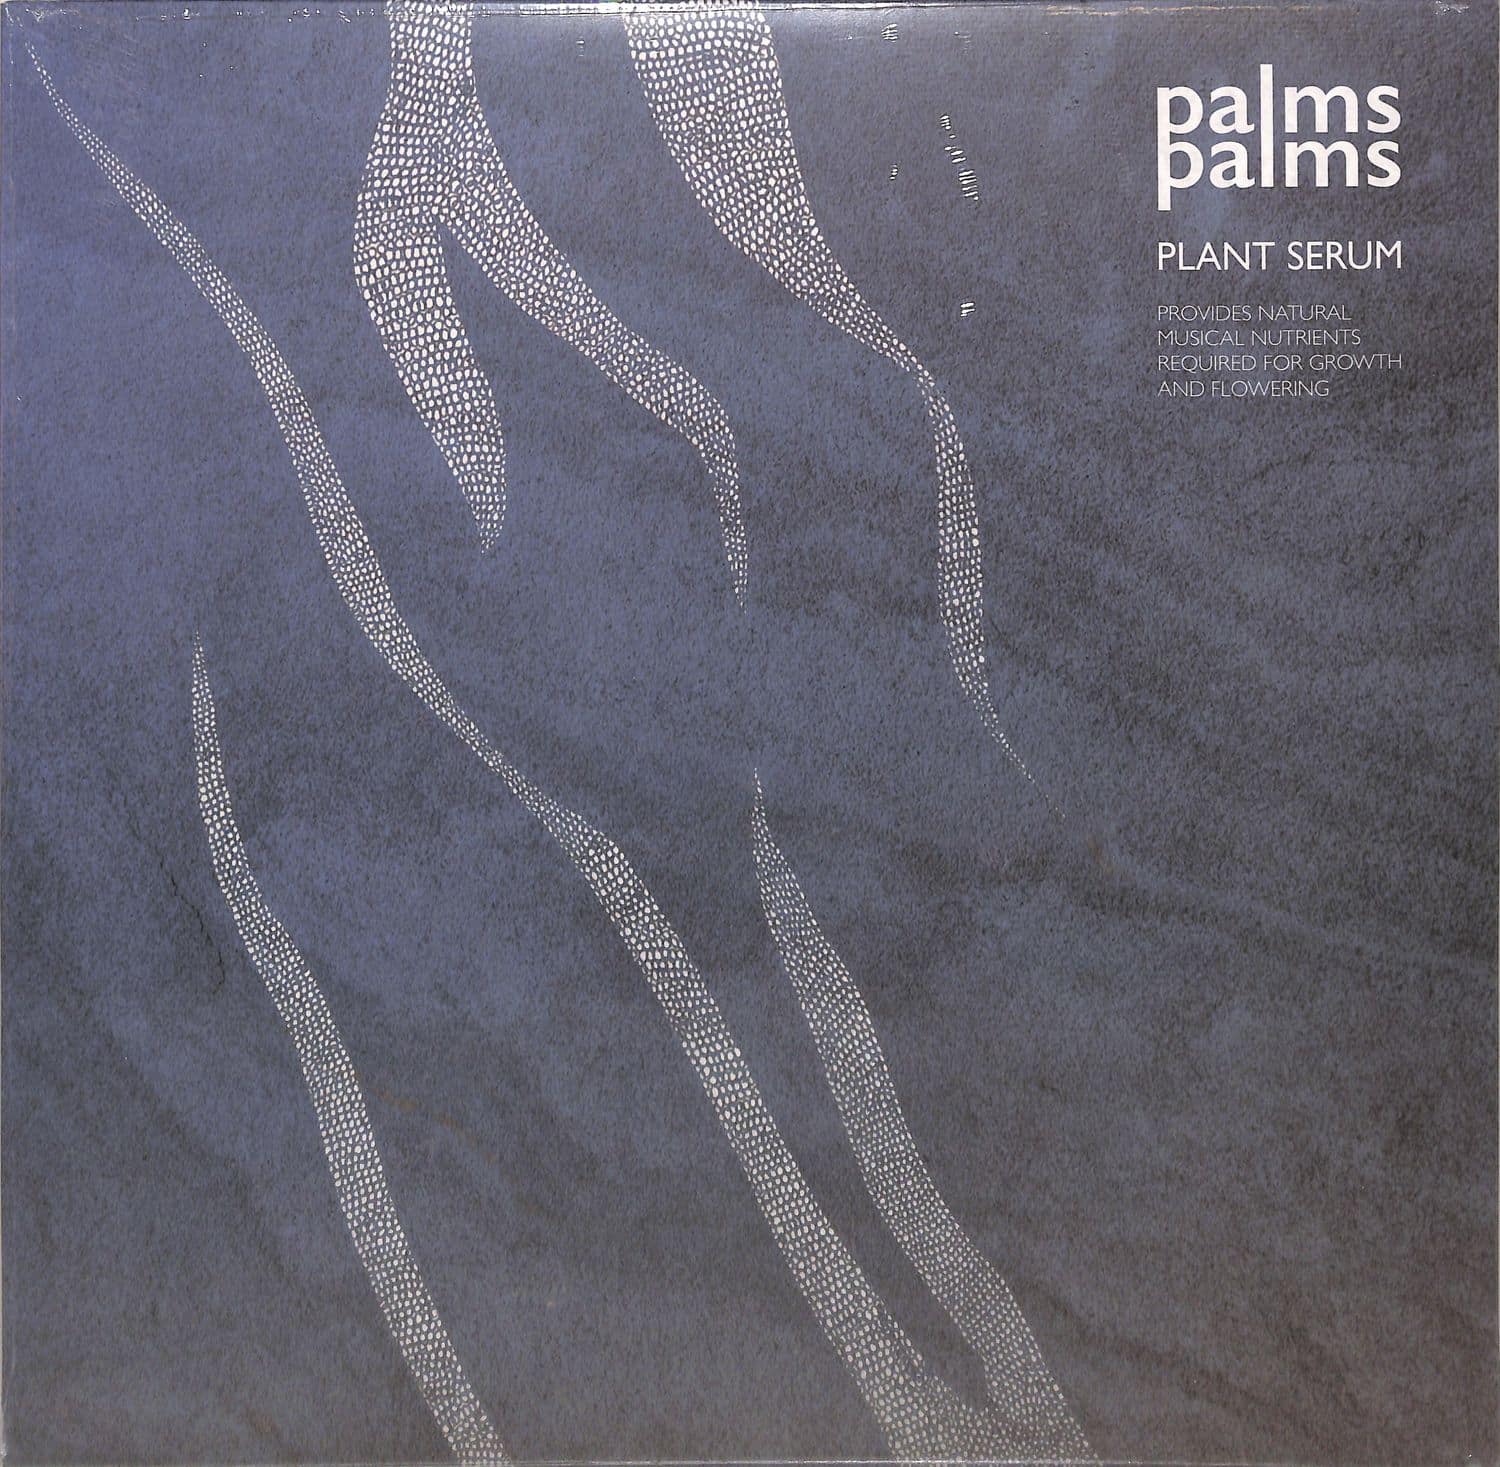 Palms Palms - PLANT SERUM 